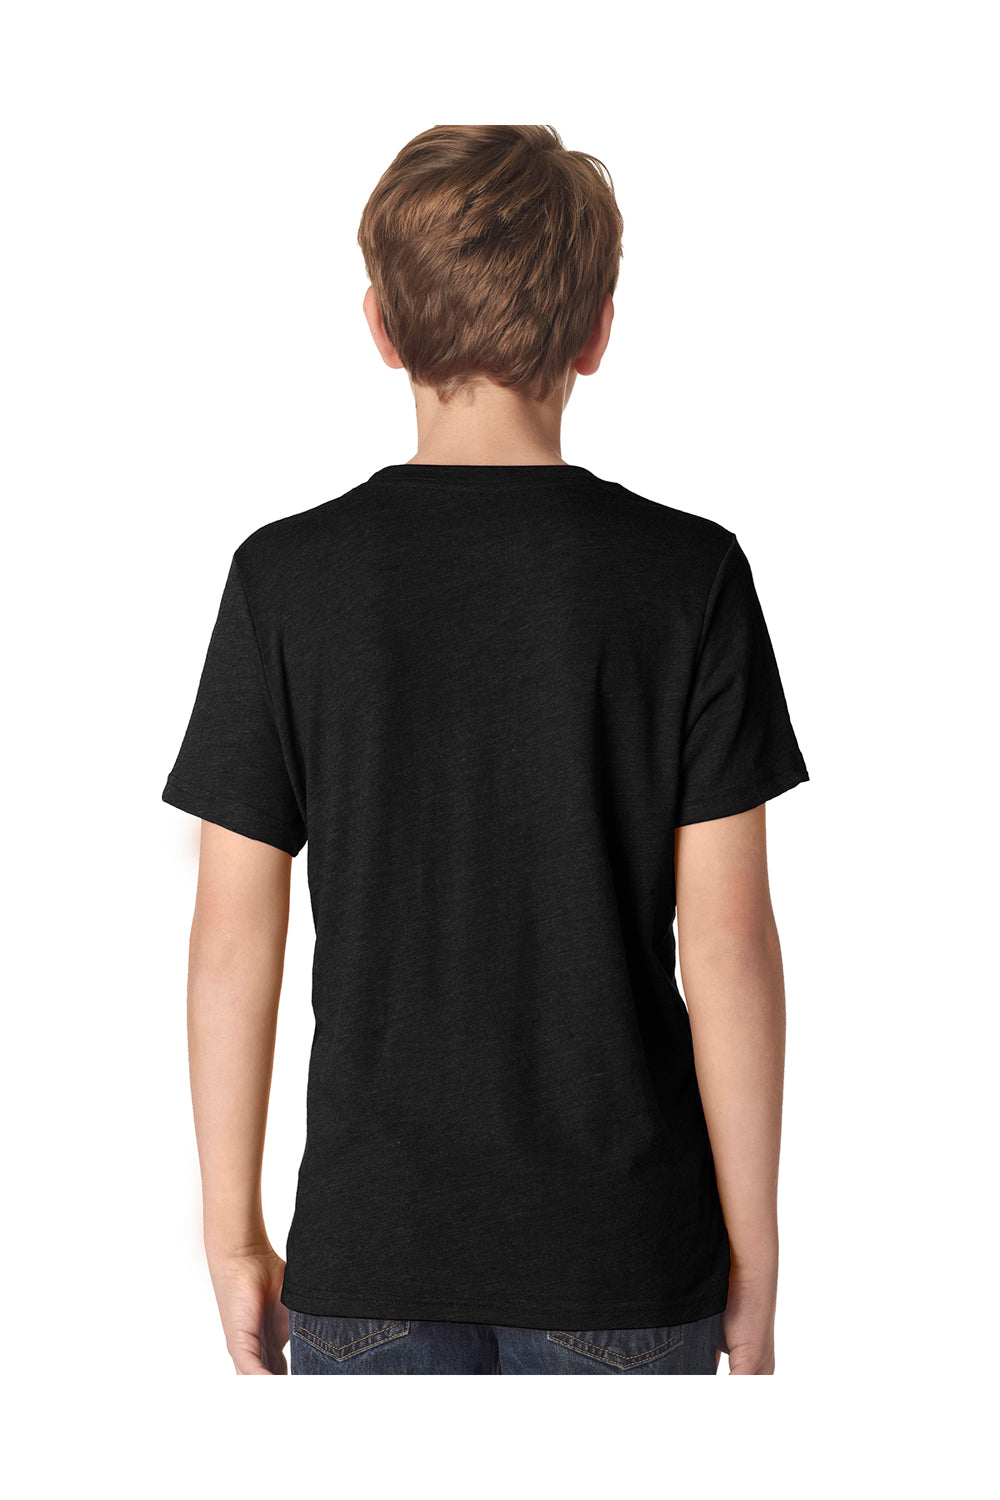 Next Level N6310 Youth Jersey Short Sleeve Crewneck T-Shirt Black Back